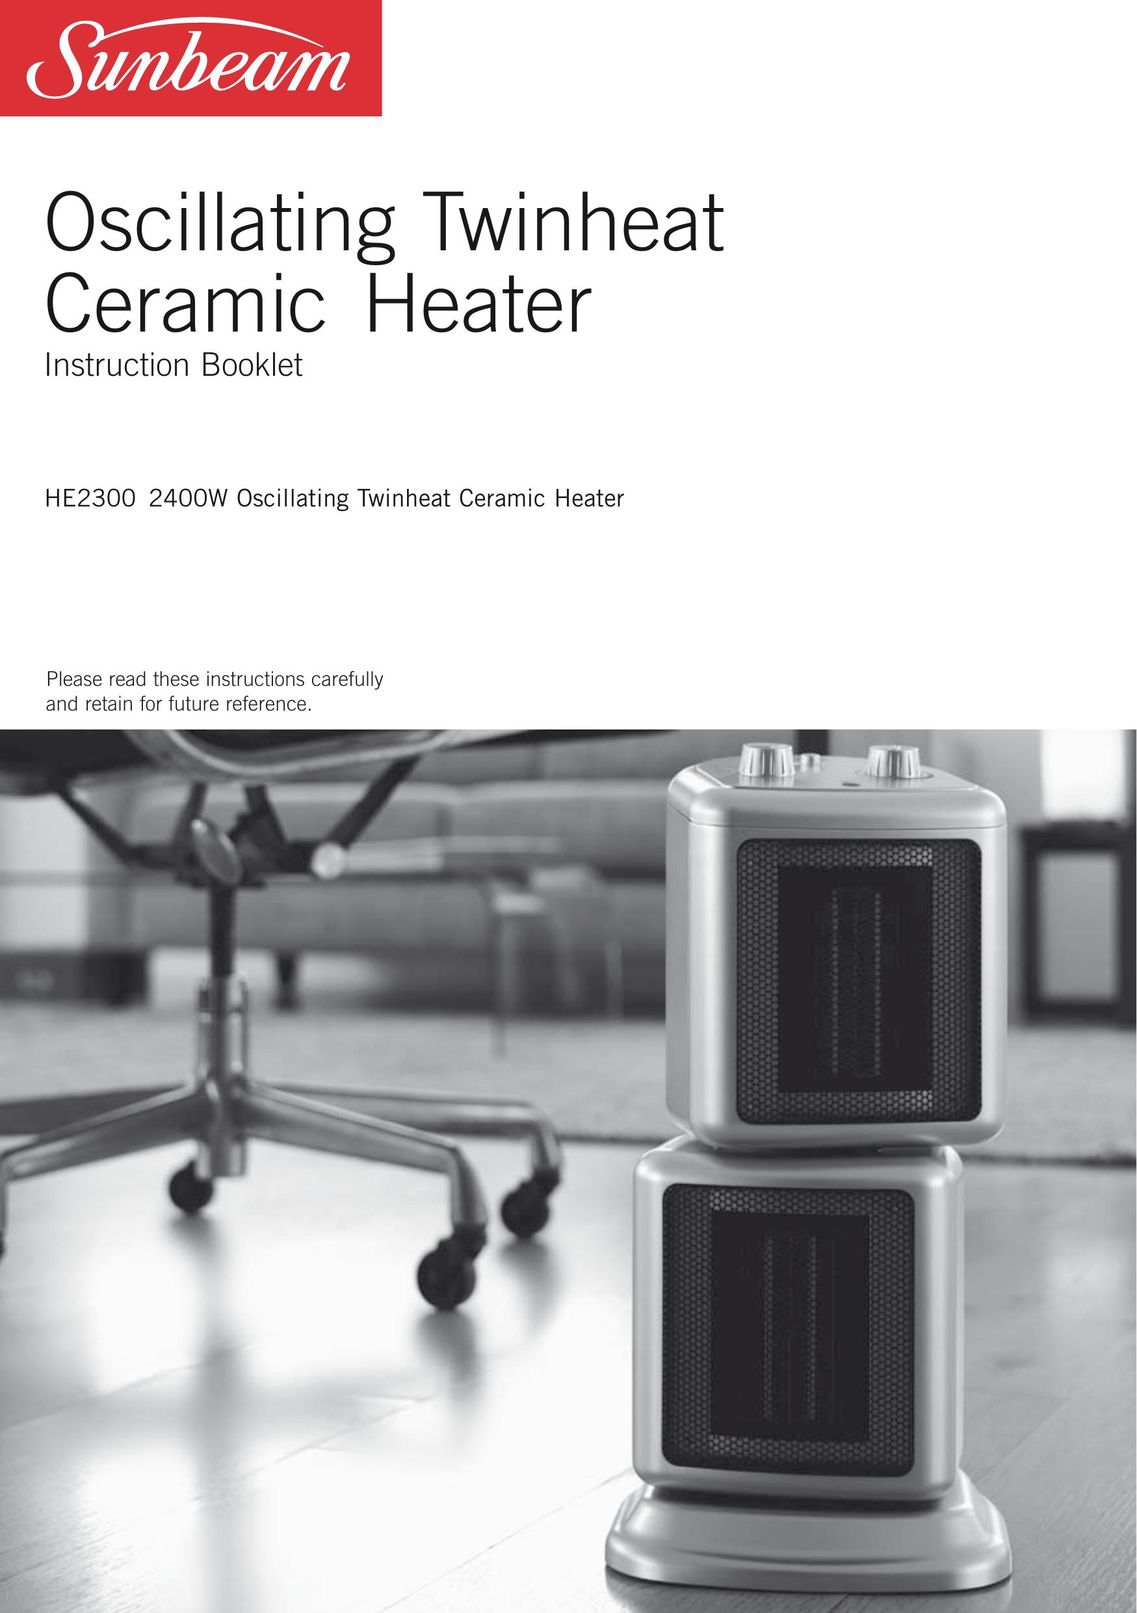 Sunbeam Bedding HE2300 Electric Heater User Manual